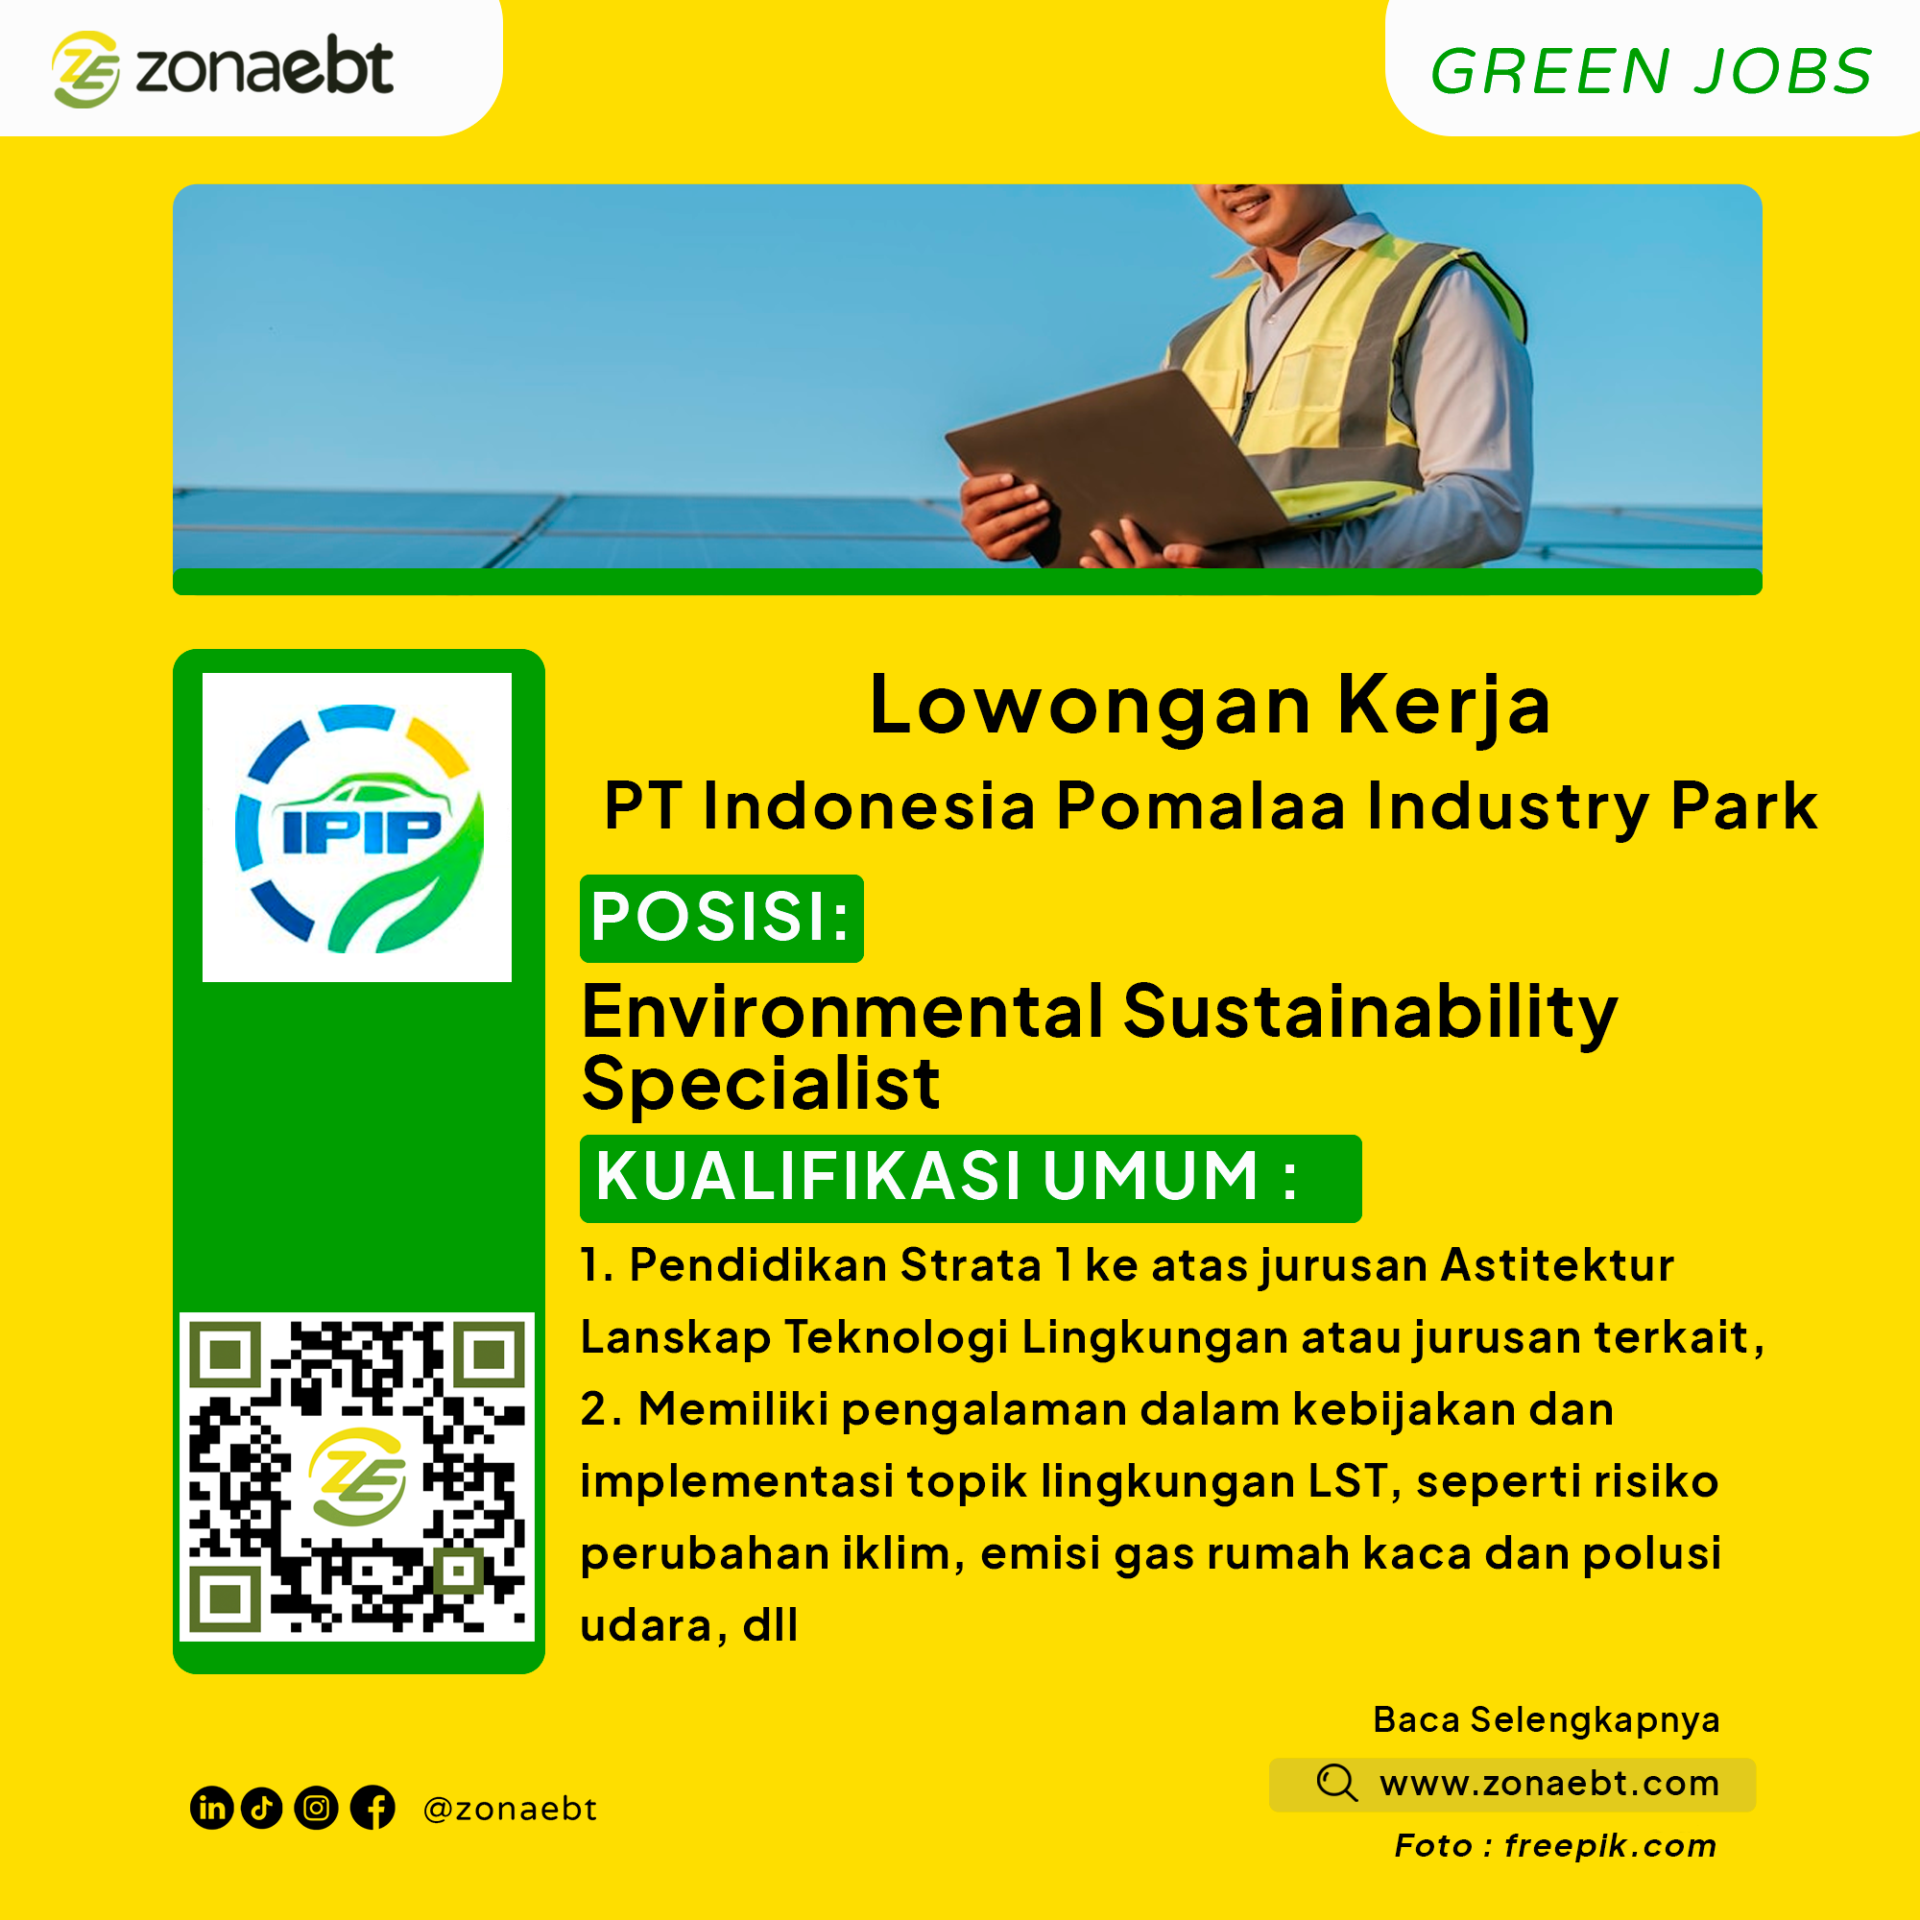 Environmental Sustainability SpecialistGreen Jobs zonaebt.com